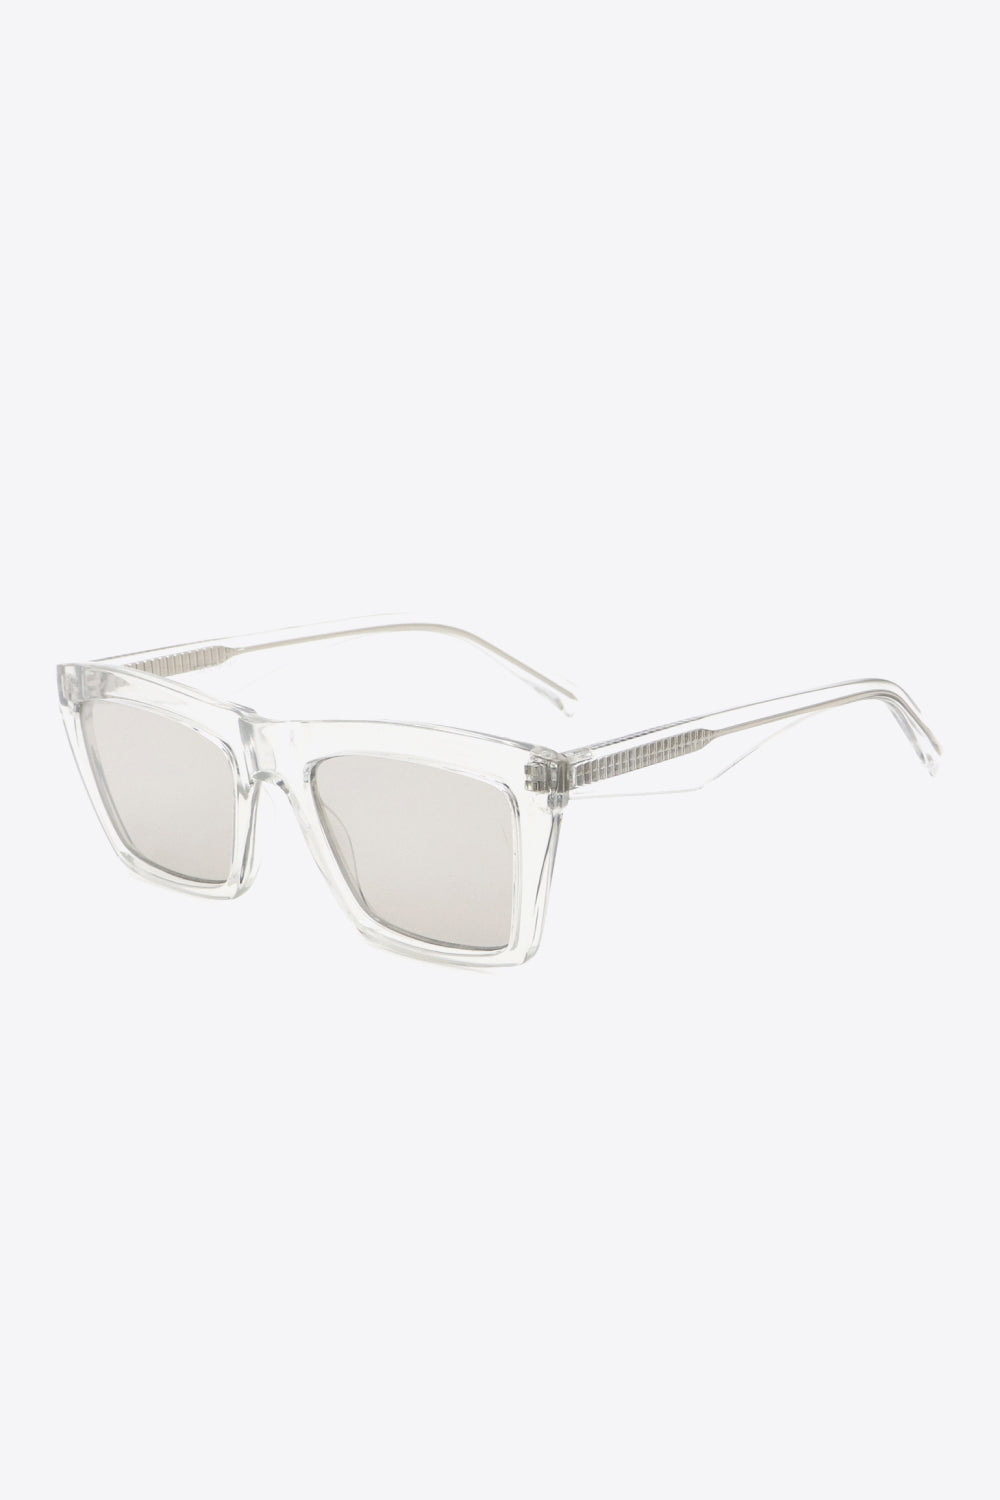 Cellulose Propionate Frame Rectangle Sunglasses - Sunglasses - FITGGINS